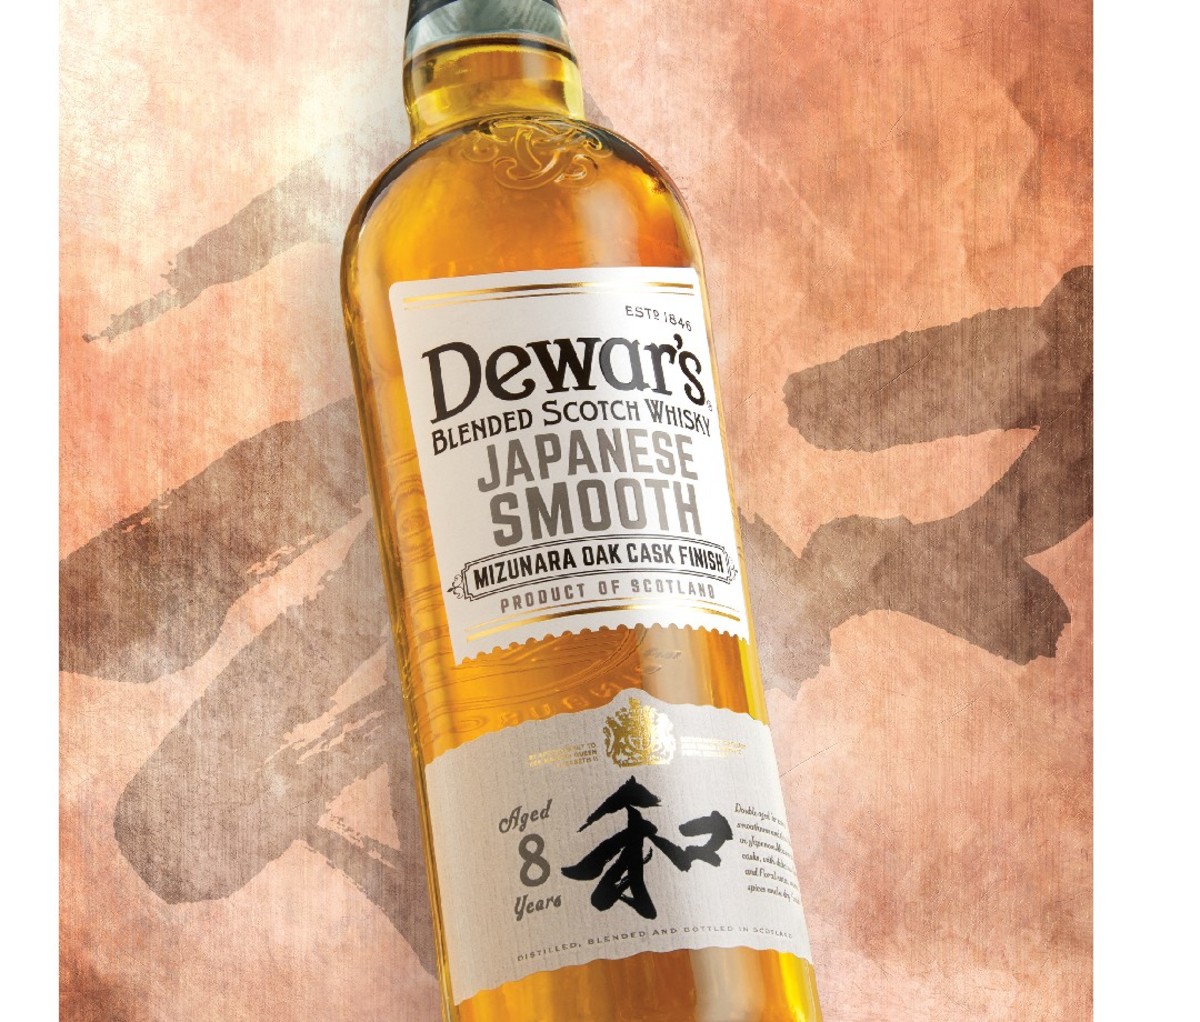 Bottle of Dewar's Japanese Smooth Scotch whisky